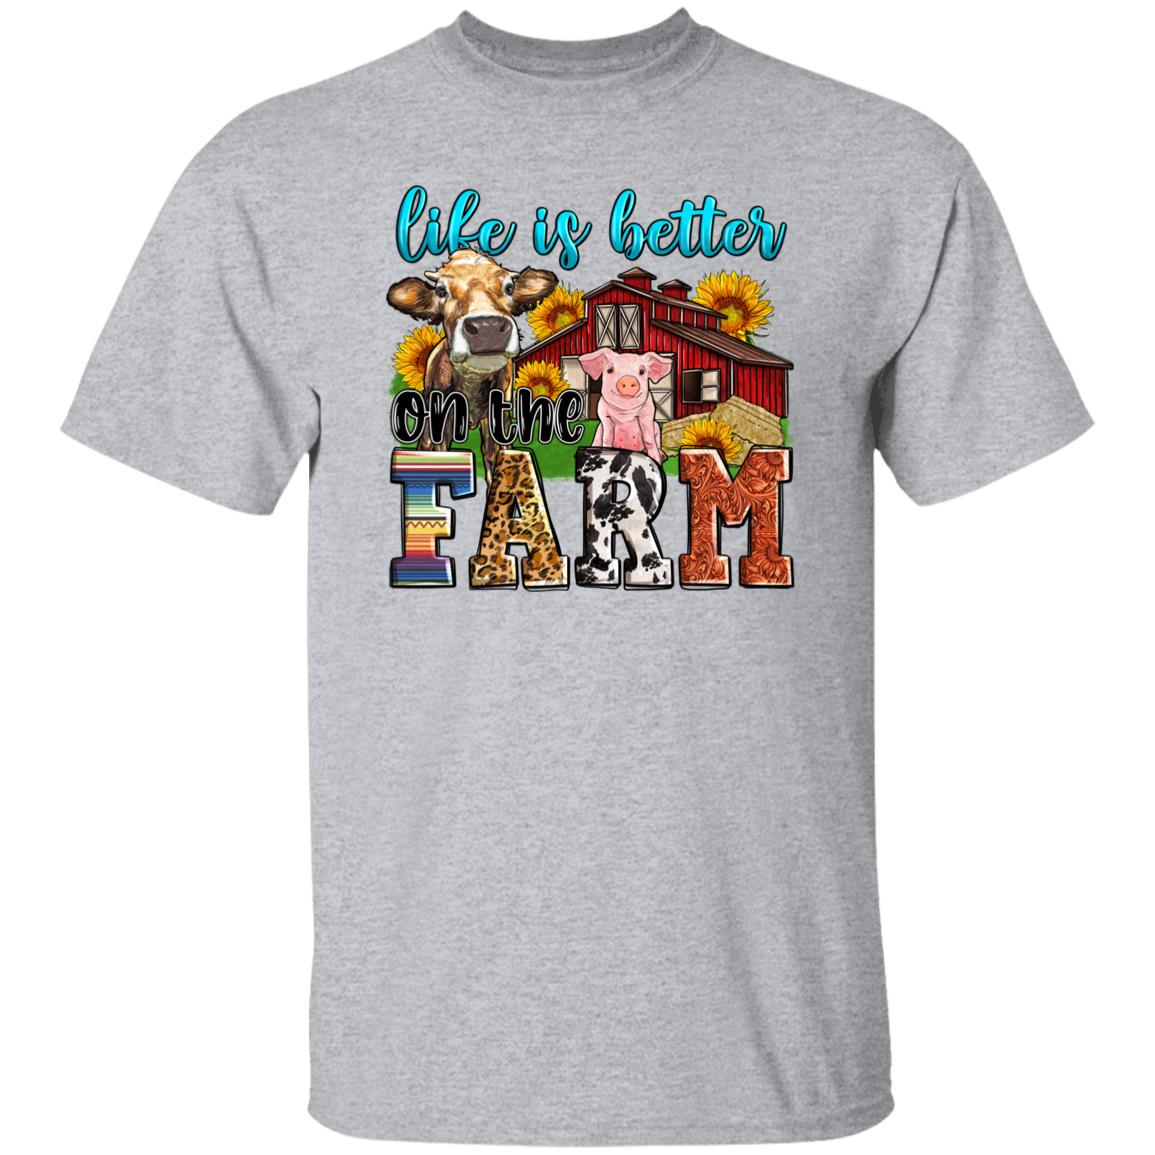 Life is better on the farm T-Shirt gift Cow pig farmer girl Unisex Tee Sand White Sport Grey-Family-Gift-Planet